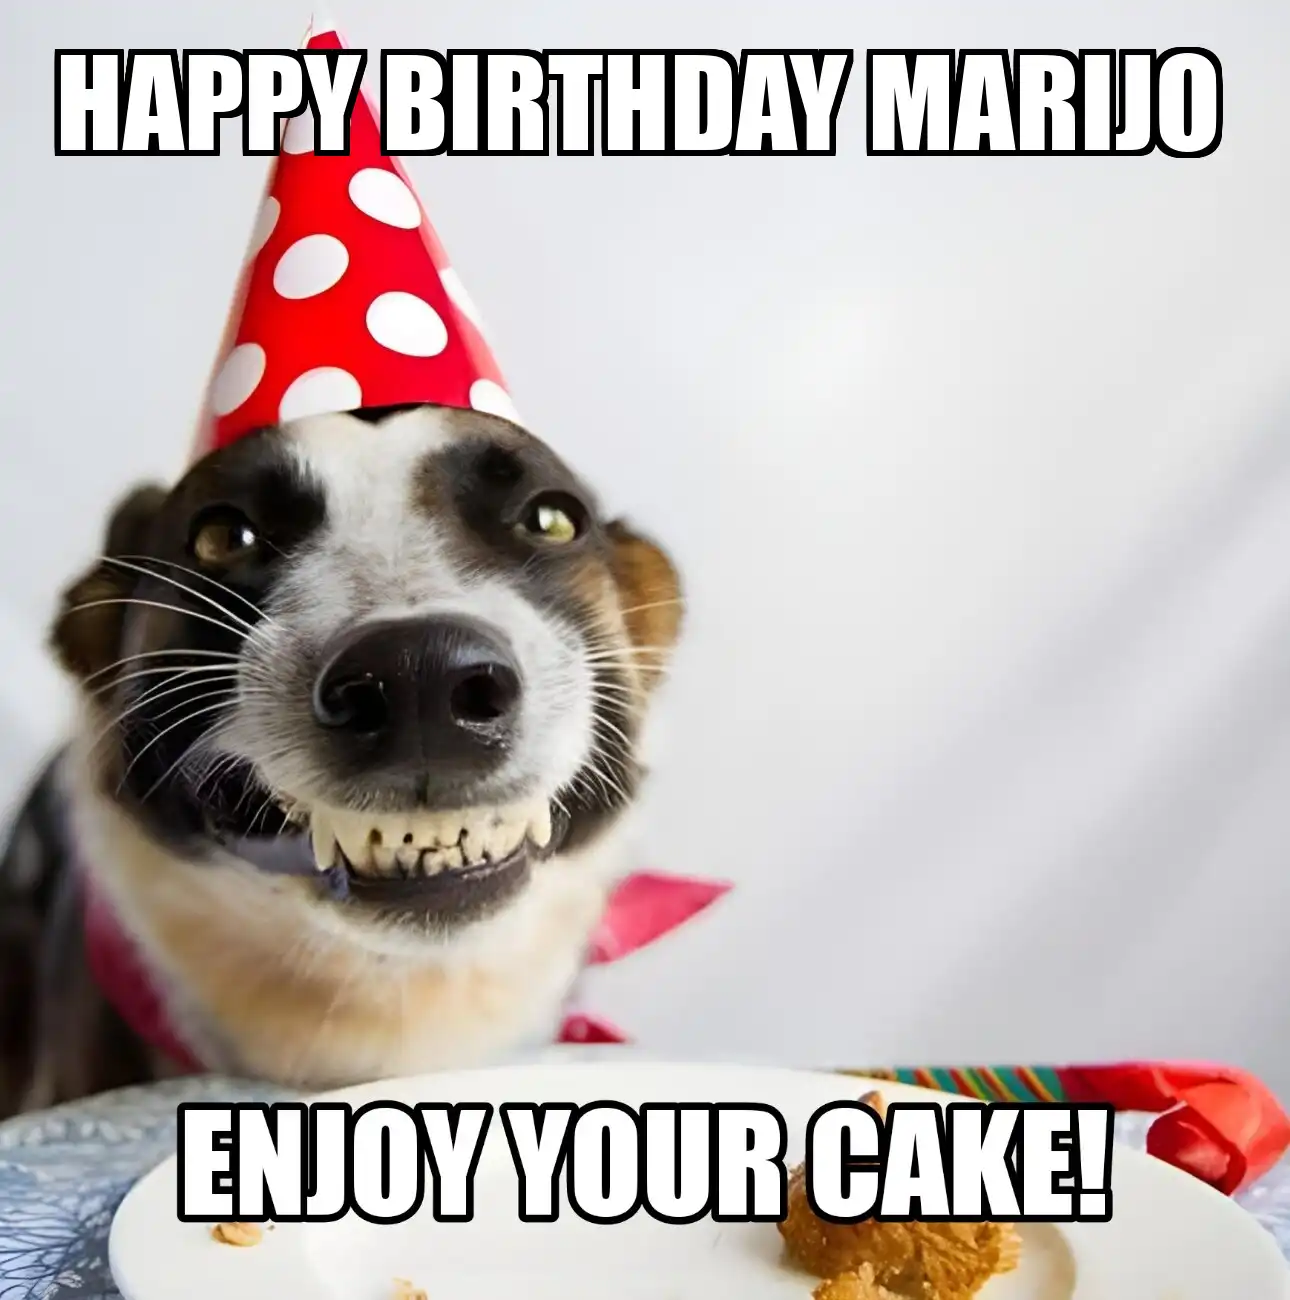 Happy Birthday Marijo Enjoy Your Cake Dog Meme